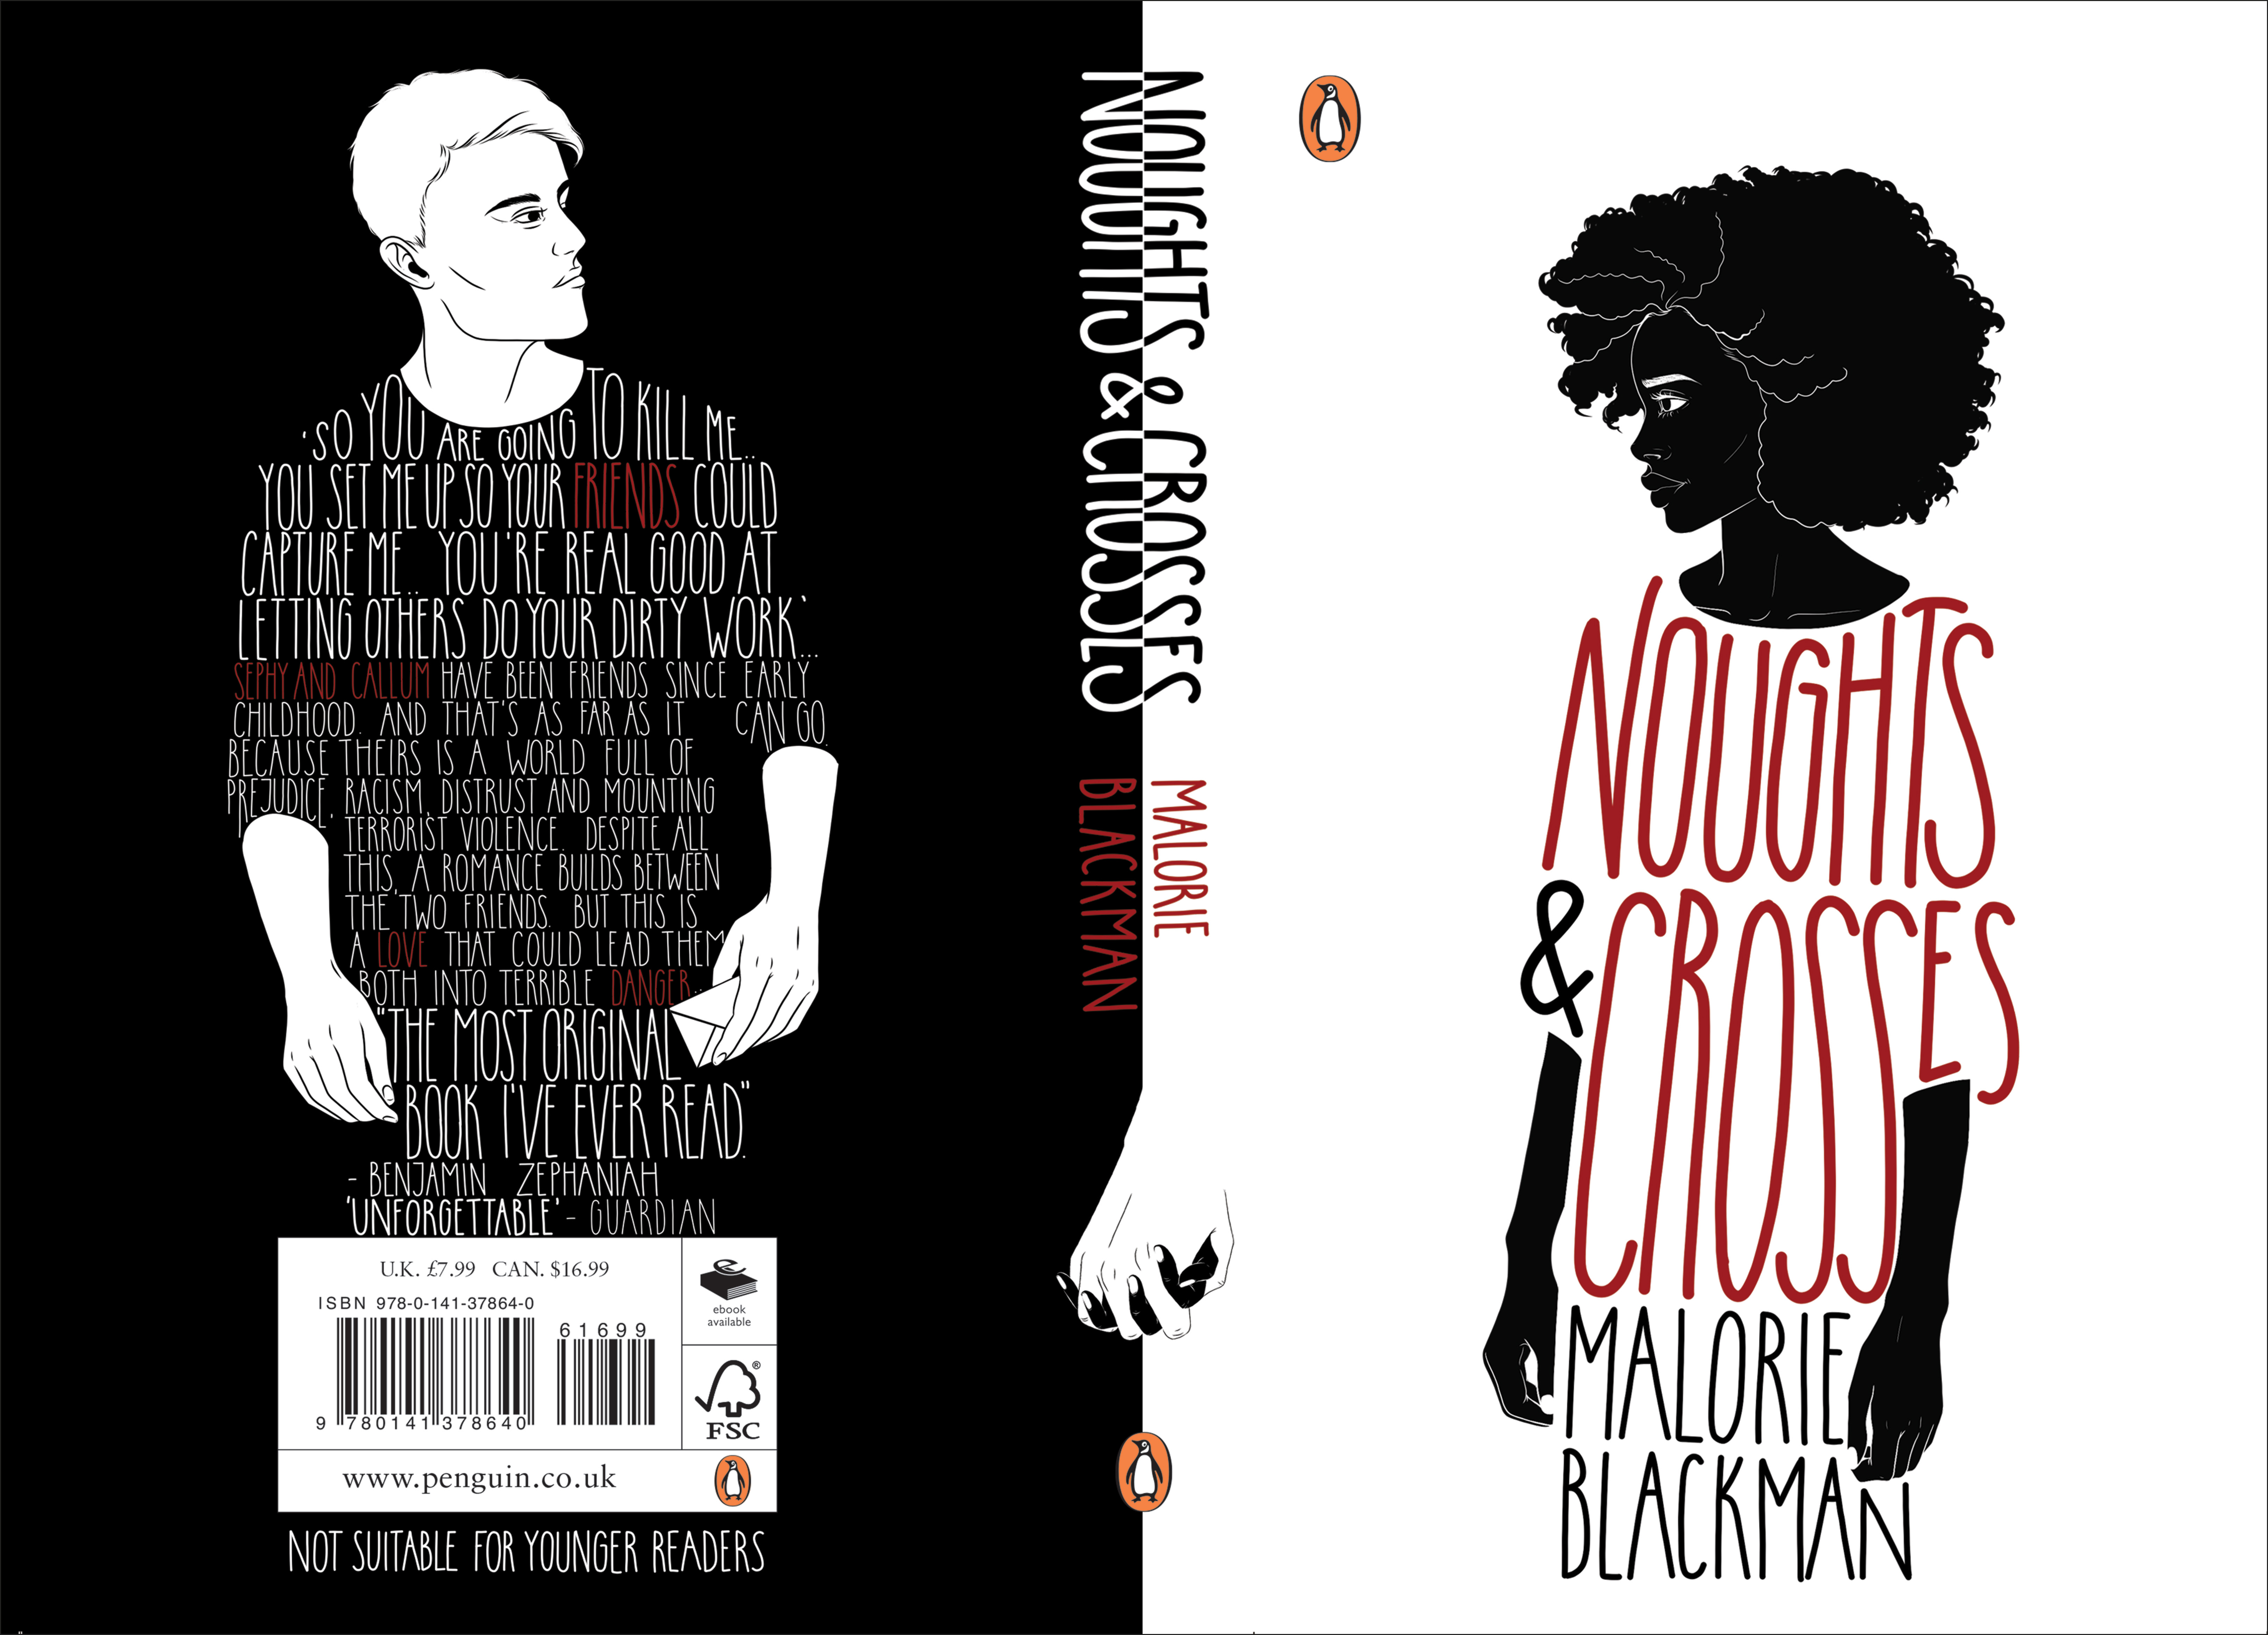 Nought & Crosses book cover design